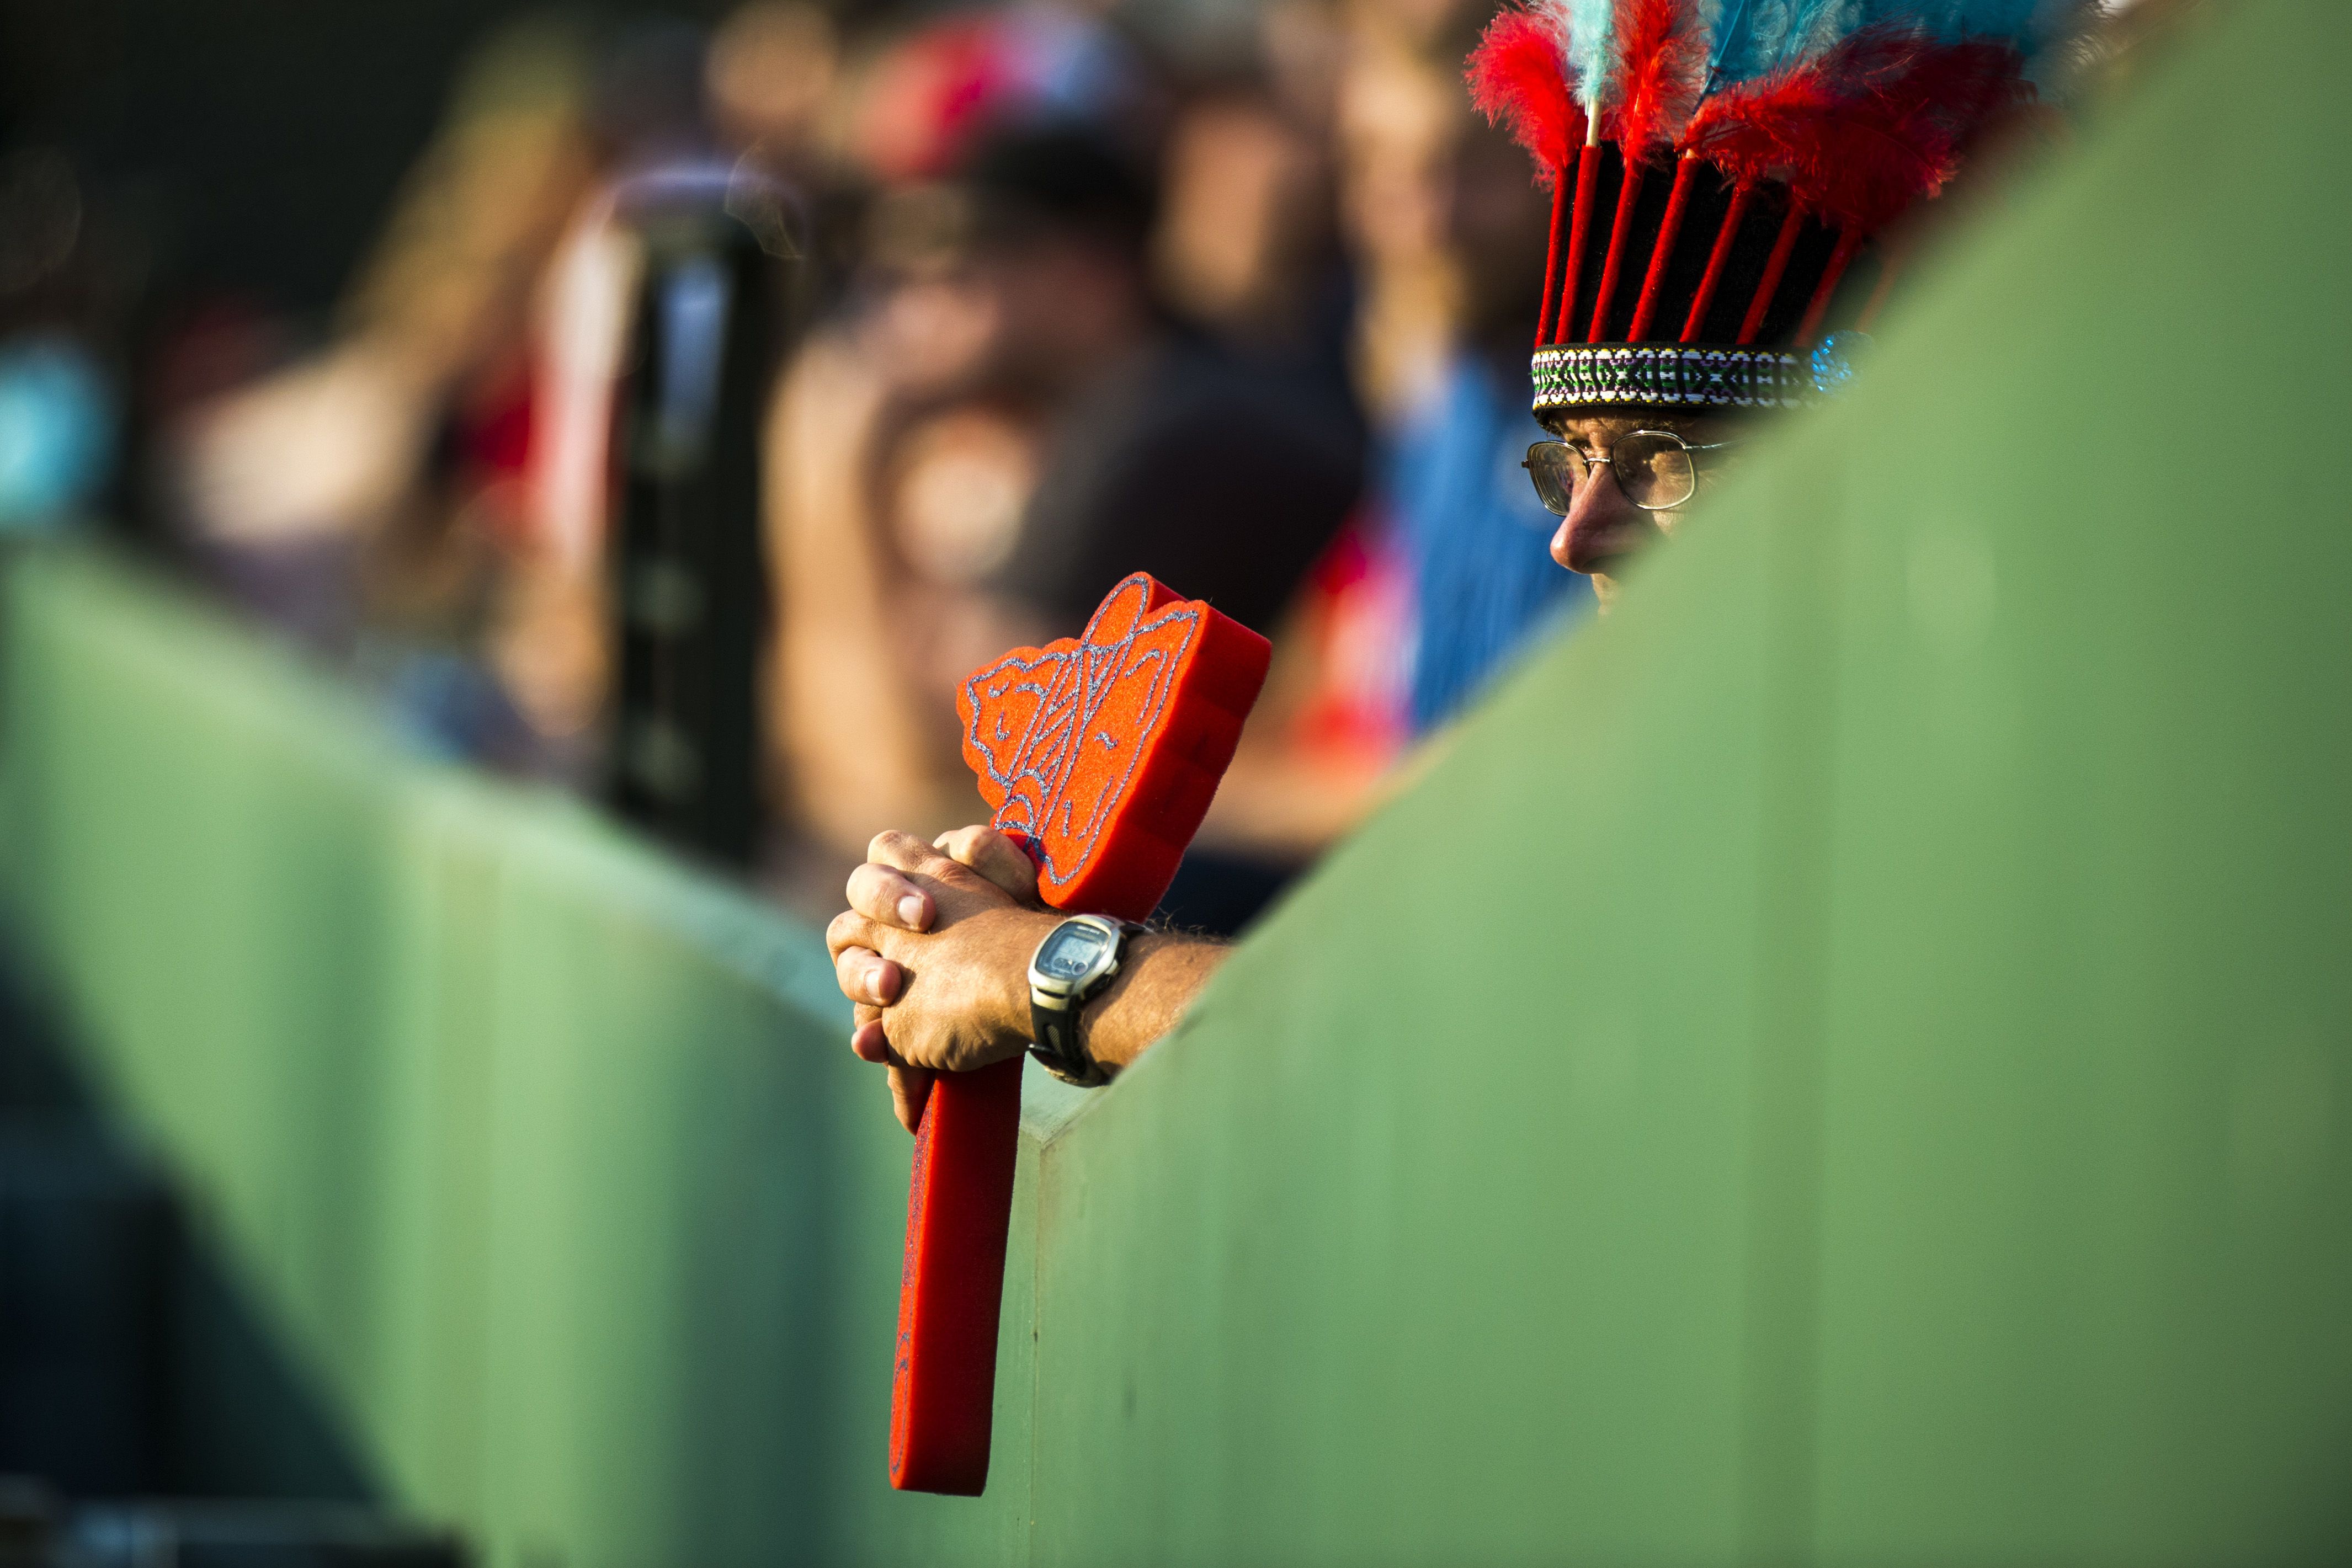 Native leaders decry Braves' 'Tomahawk chop' ahead of World Series